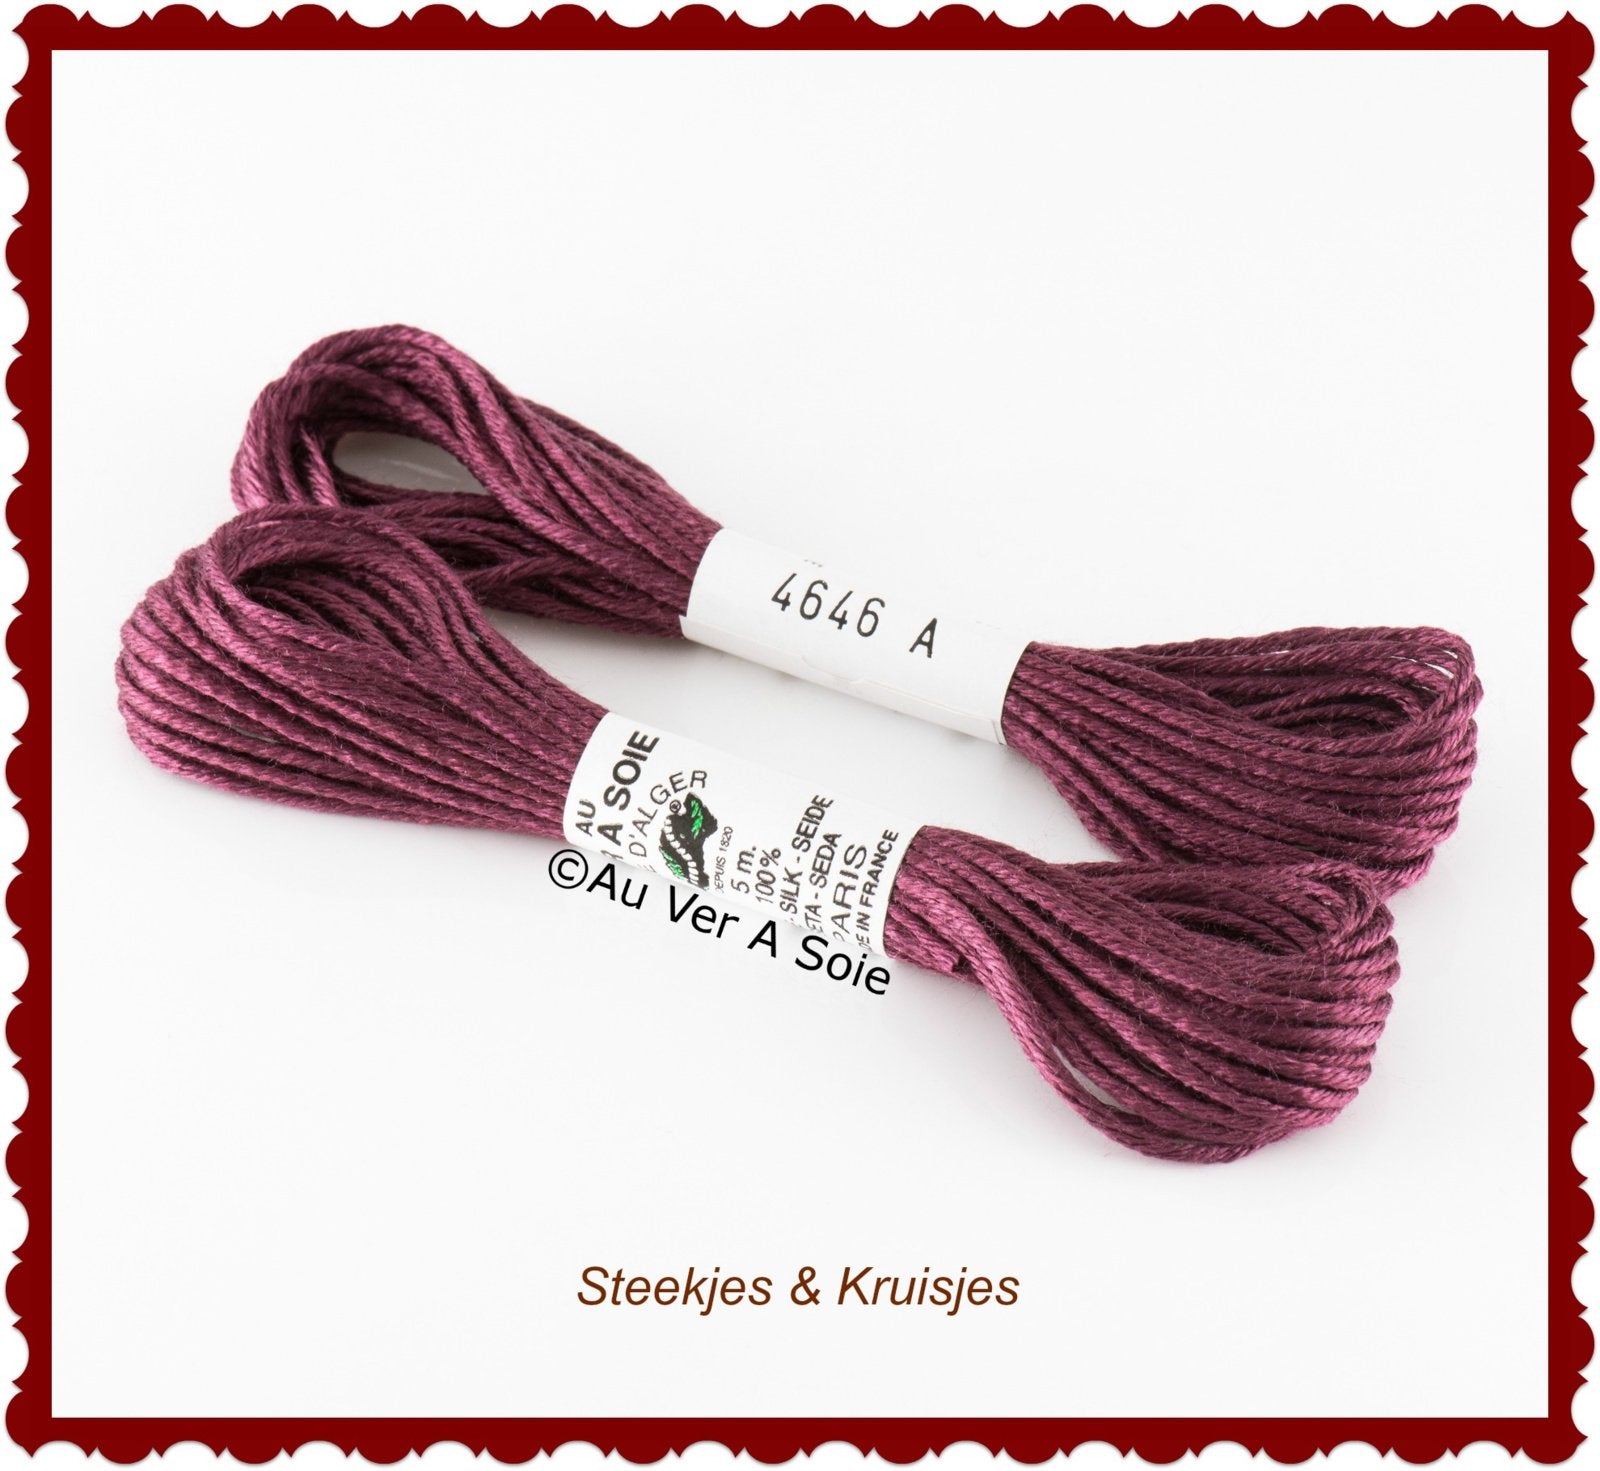 Au ver ie "soie d'alger" silk yarn color no. 4646